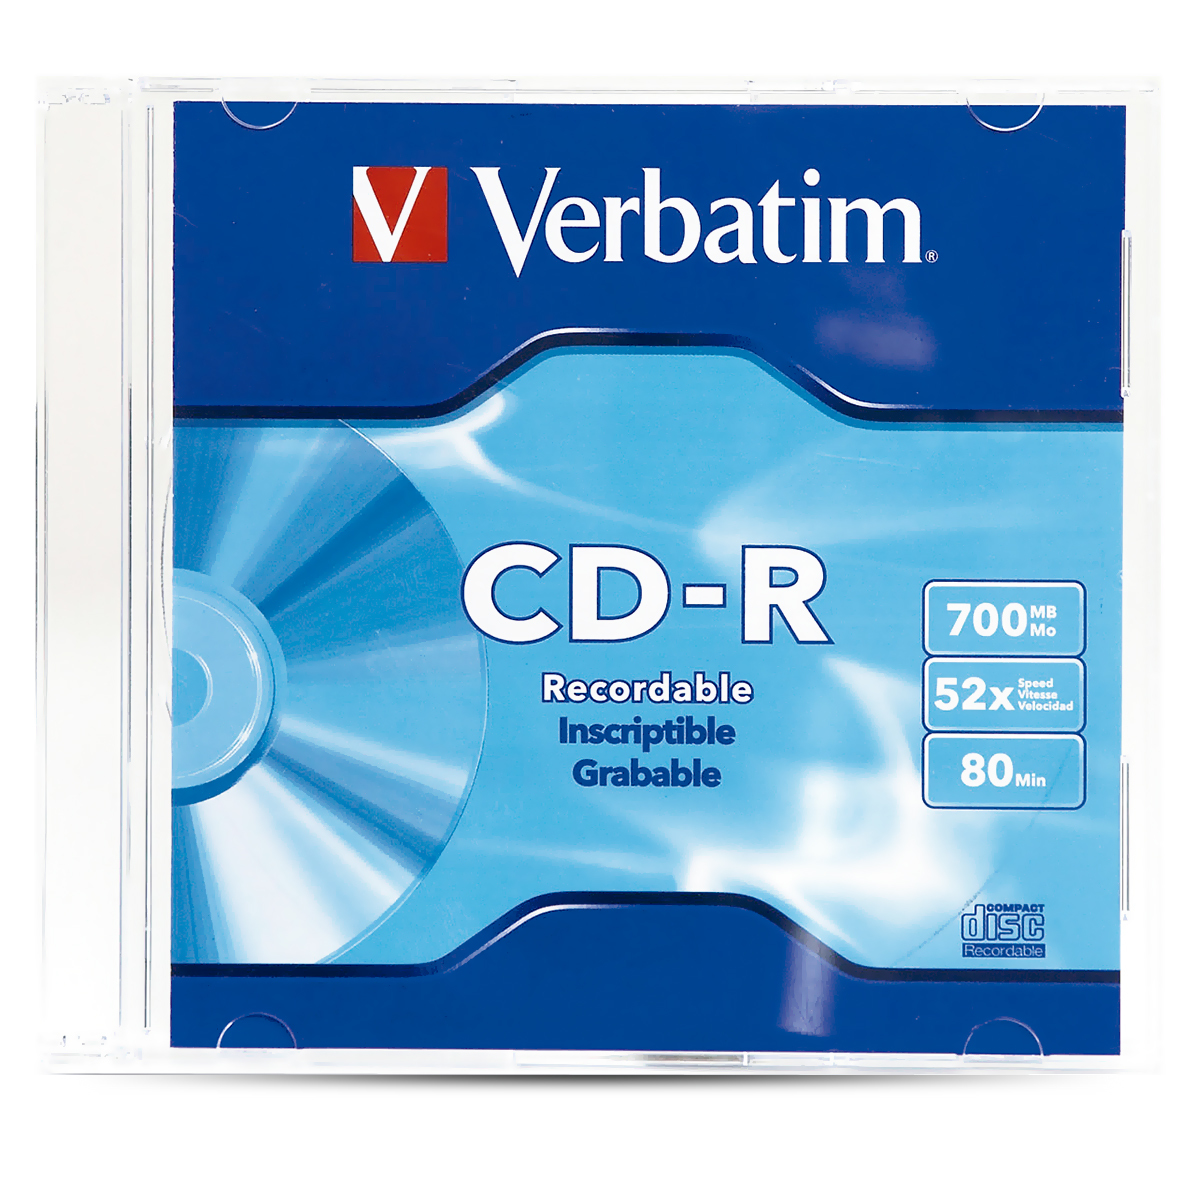 CD-R Verbatim 94776 / 700 mb / 52x / 80 min. / Estuche 1 pieza